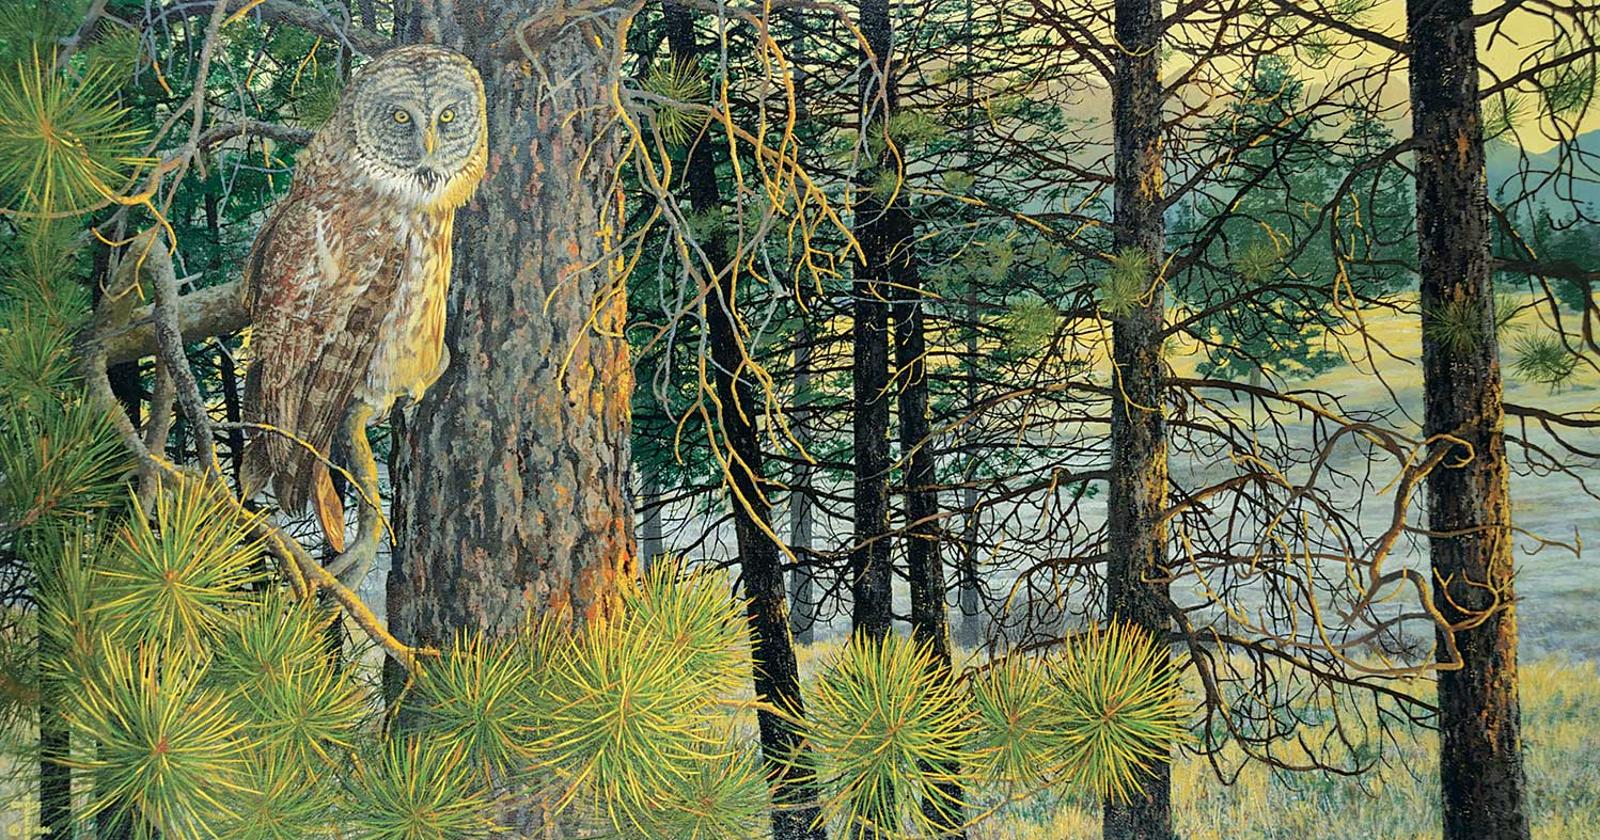 Joseph Cross - Untitled - Owl in the Sunlit Woods